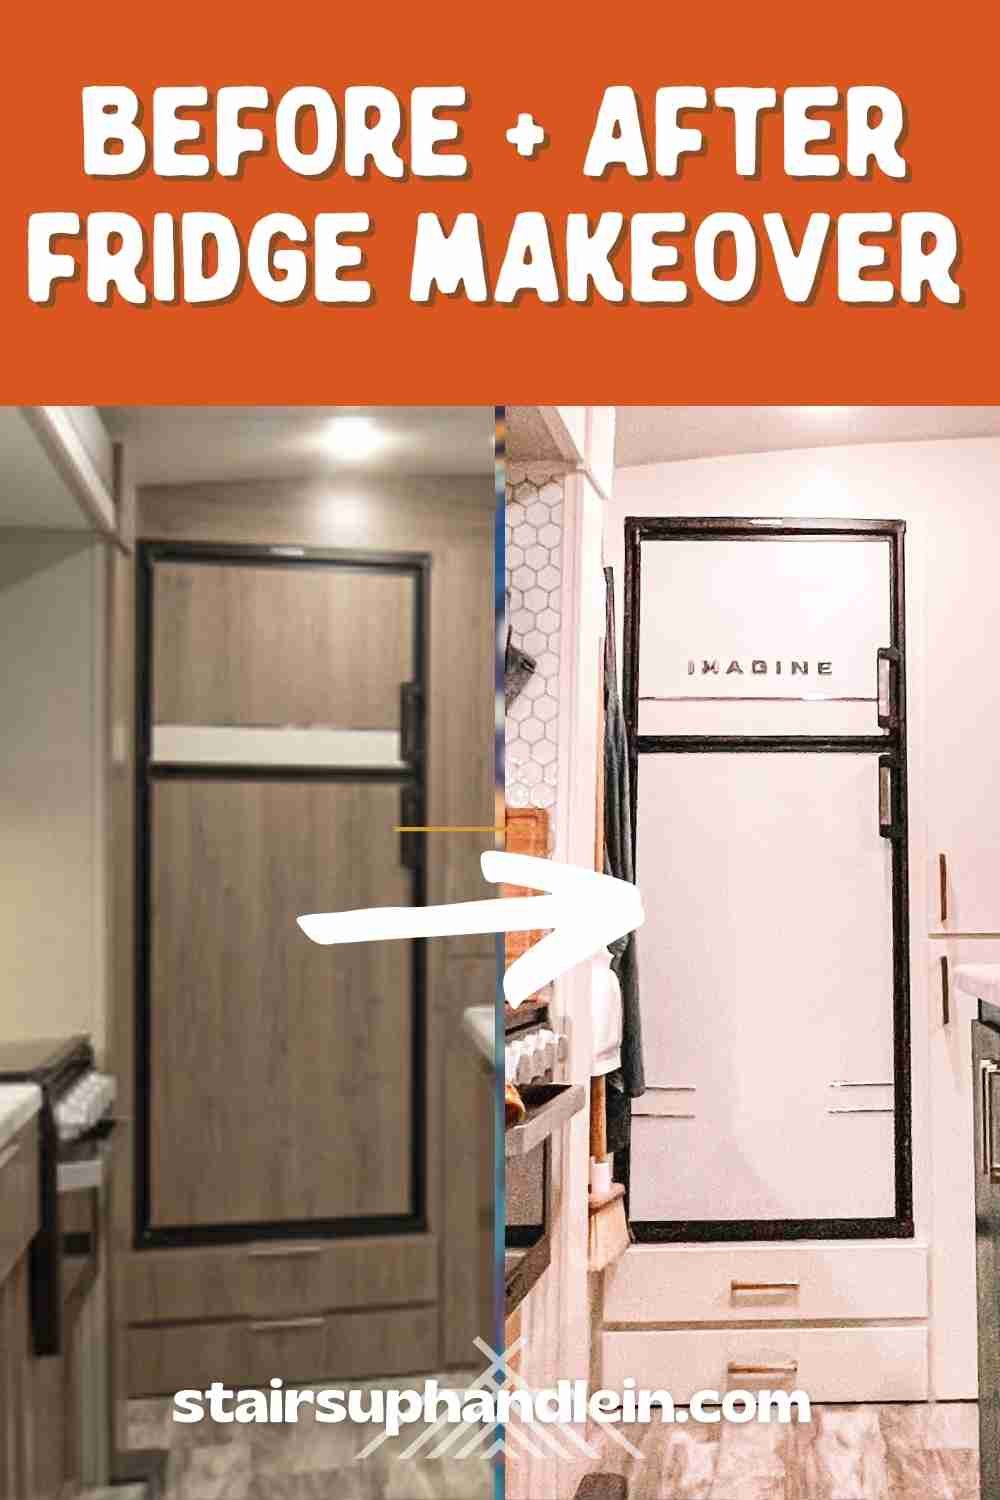 7 RV Refrigerator Makeover Ideas